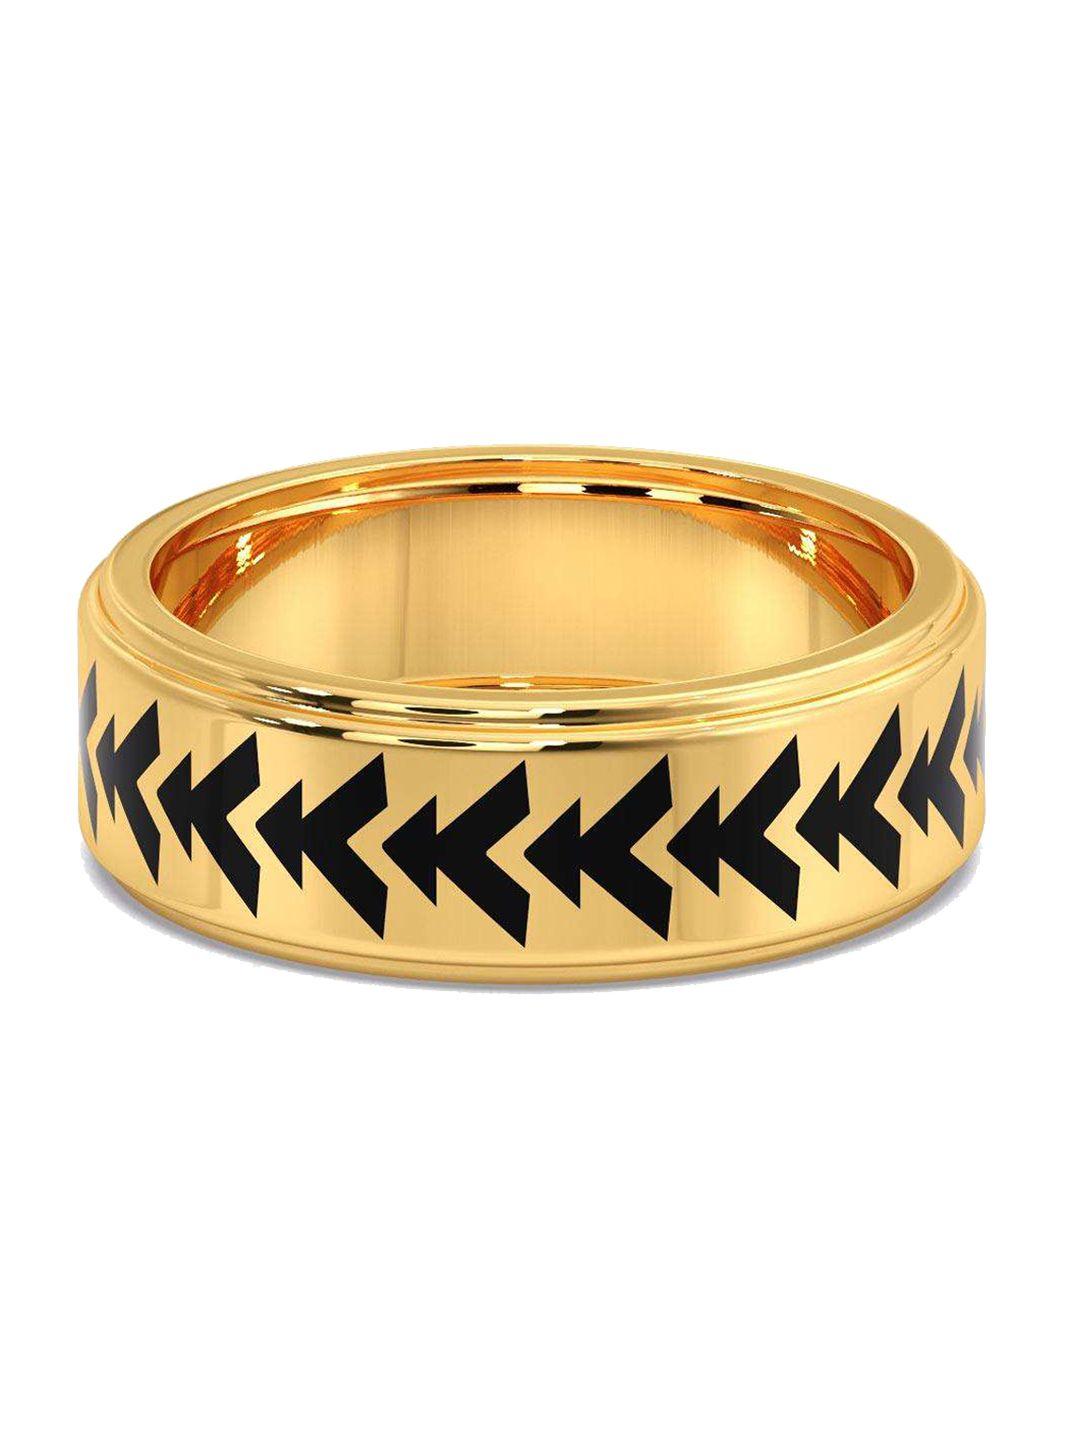 candere a kalyan jewellers company men 18kt bis hallmark gold finger ring- 5.03 gm